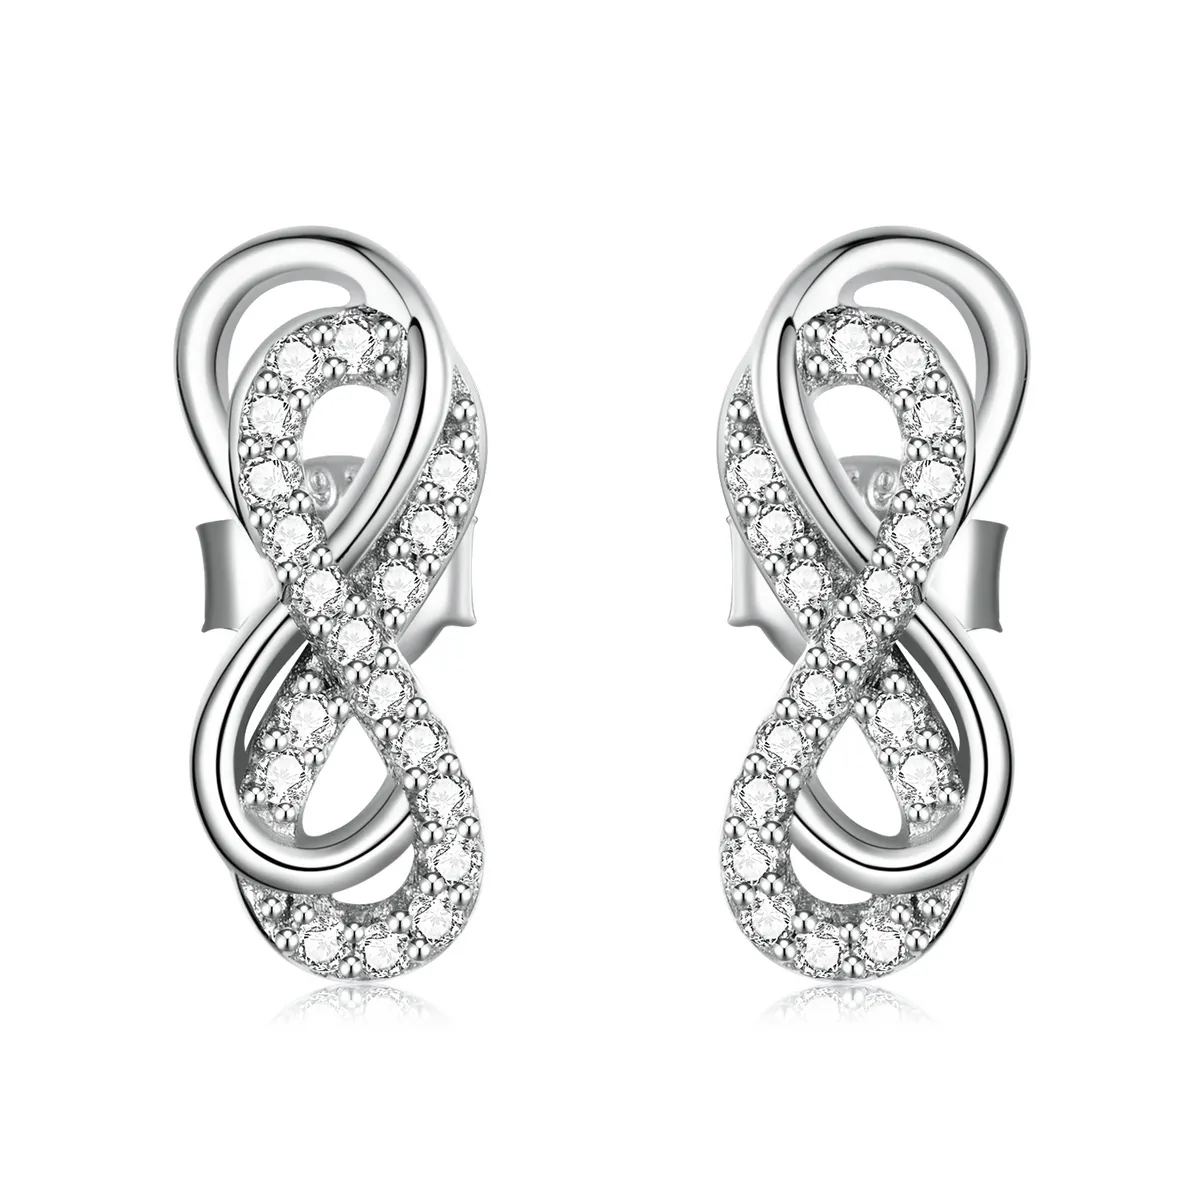 Pandora Style Infinity Symbols - Double Layer Stud Earrings - BSE542